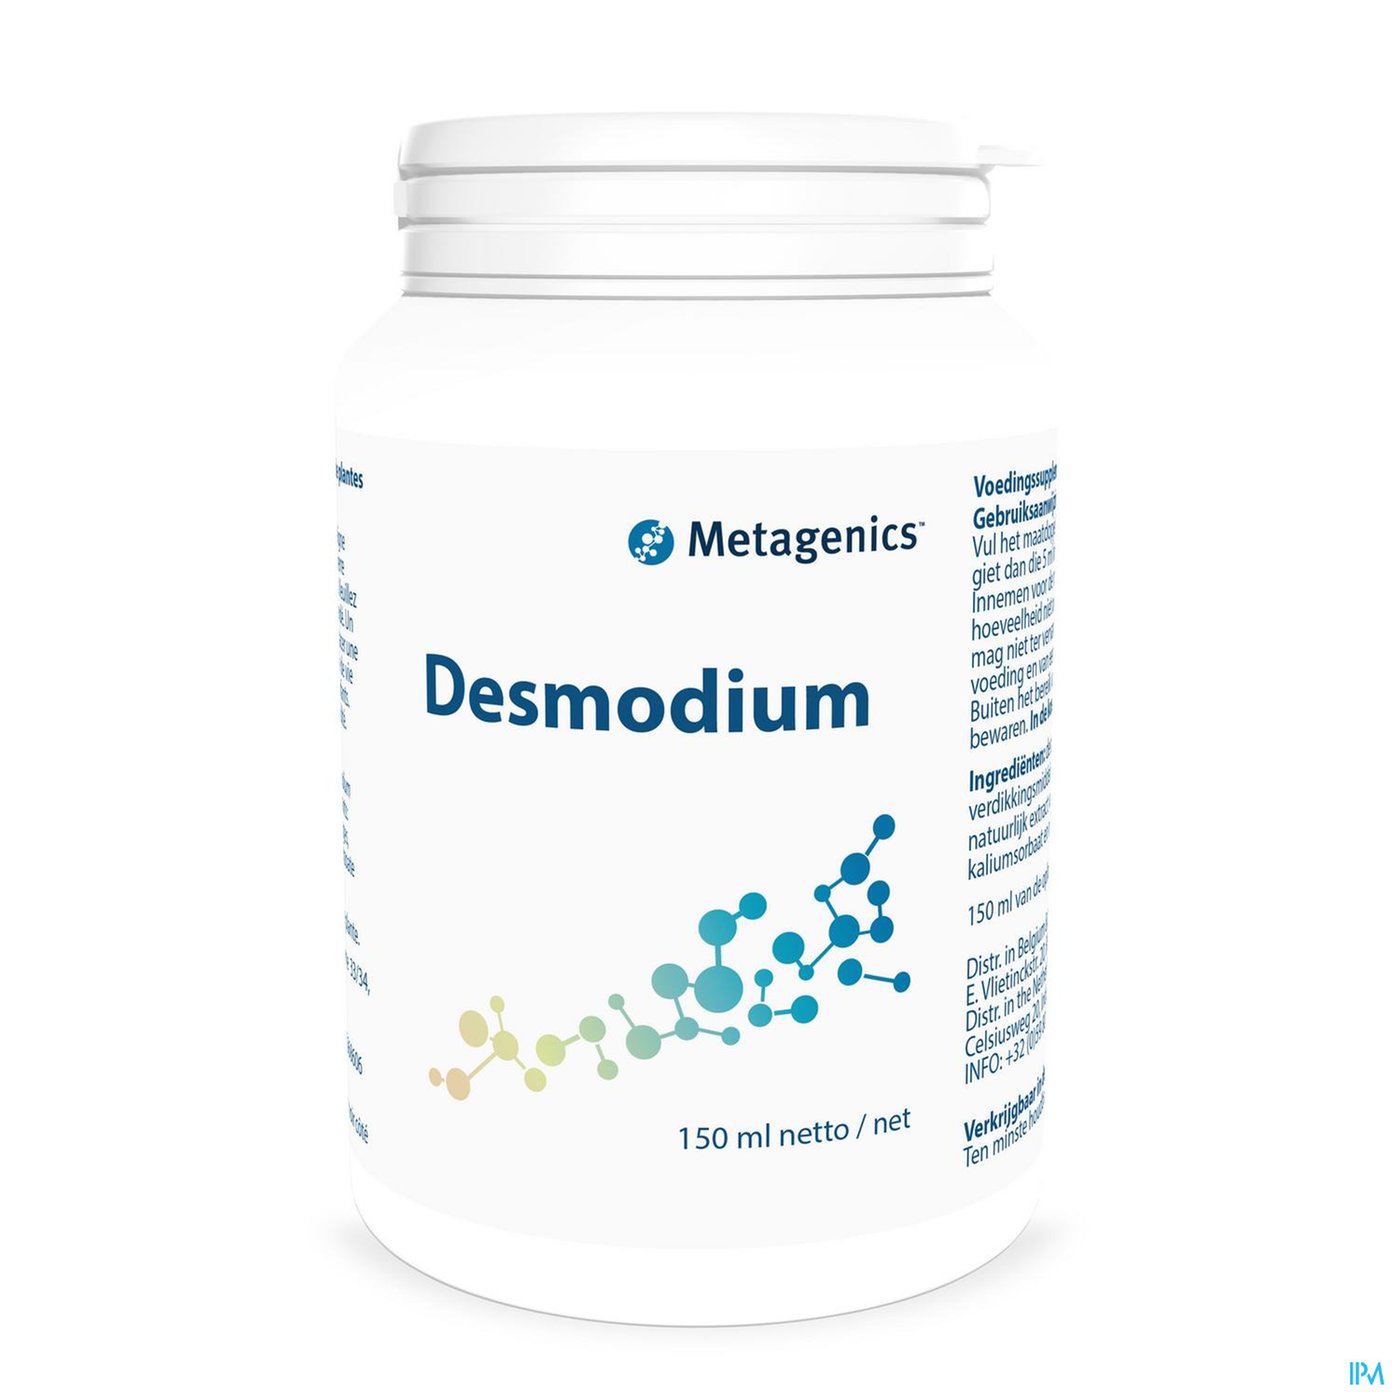 Desmodium 150ml Metagenics packshot